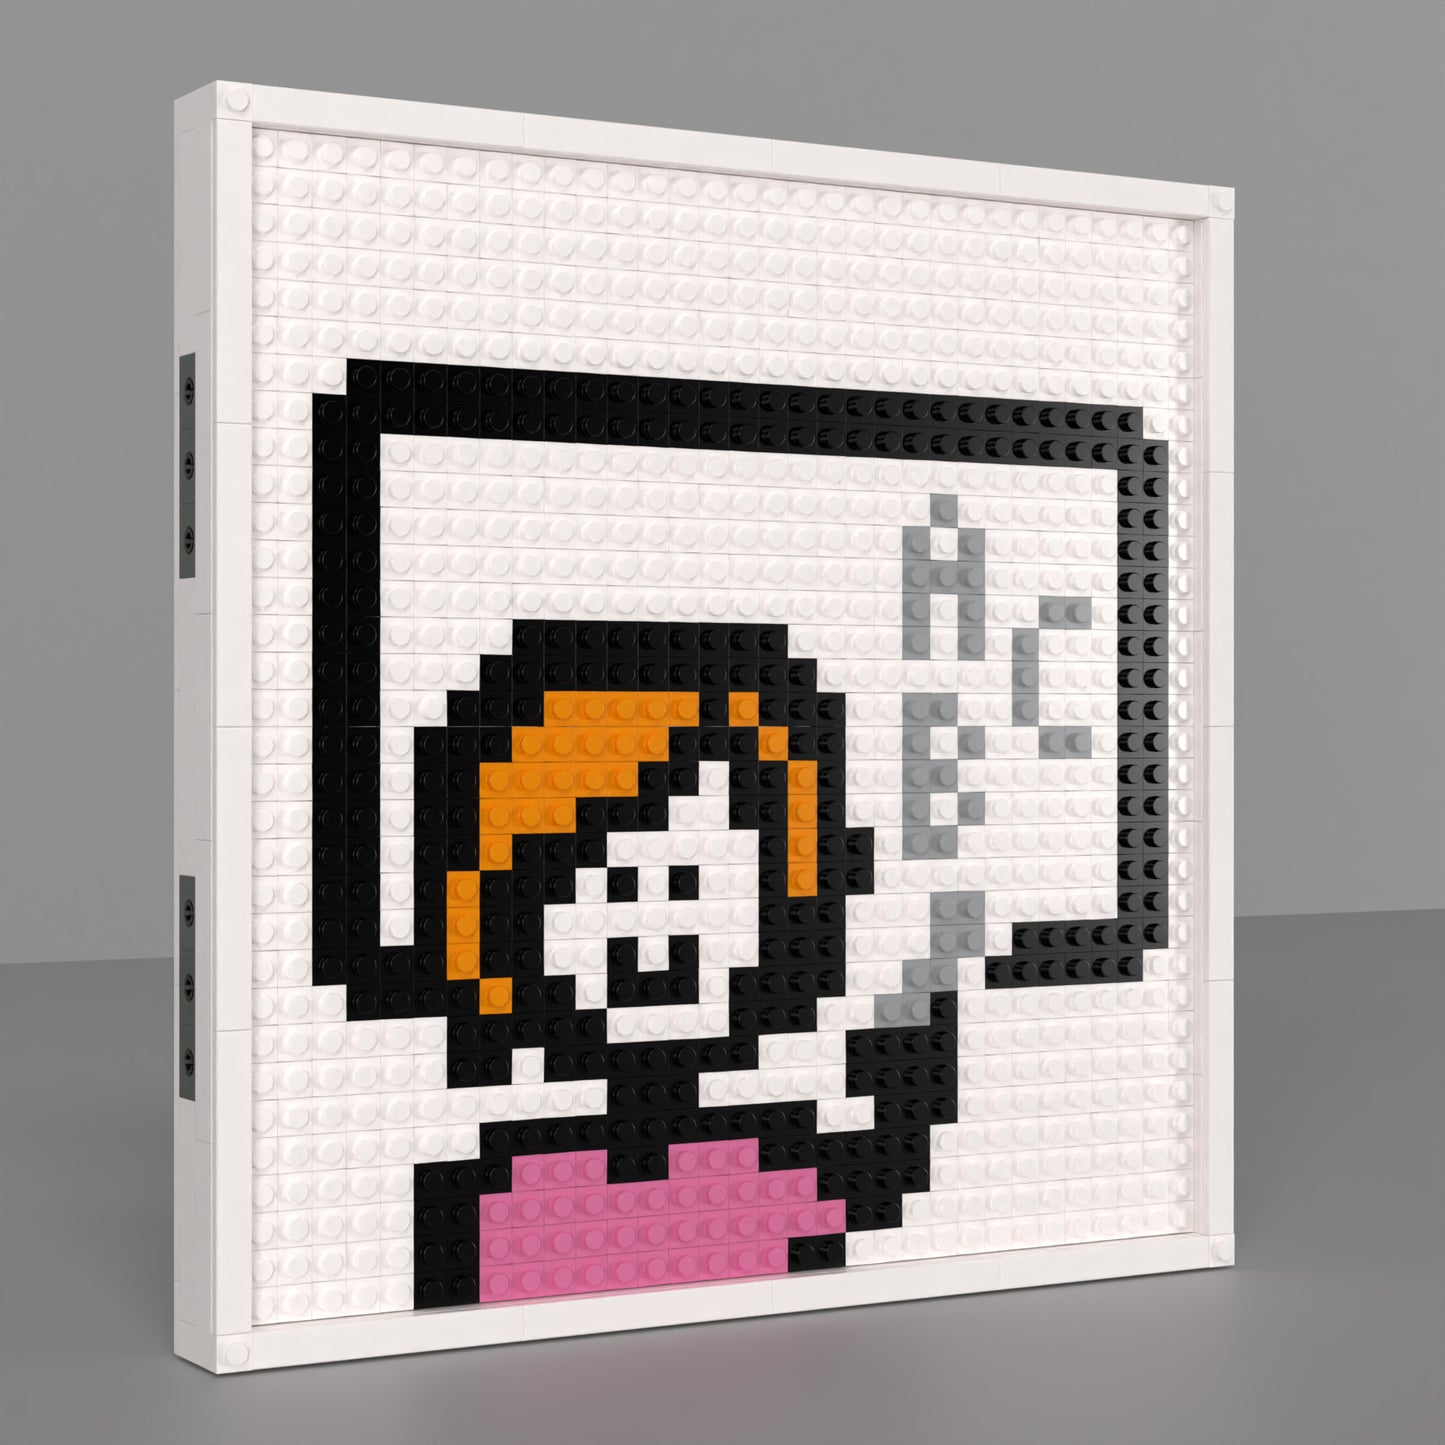 Teacher in Classroom Building Brick Pixel Art - 32*32 Modular Compatible with Lego